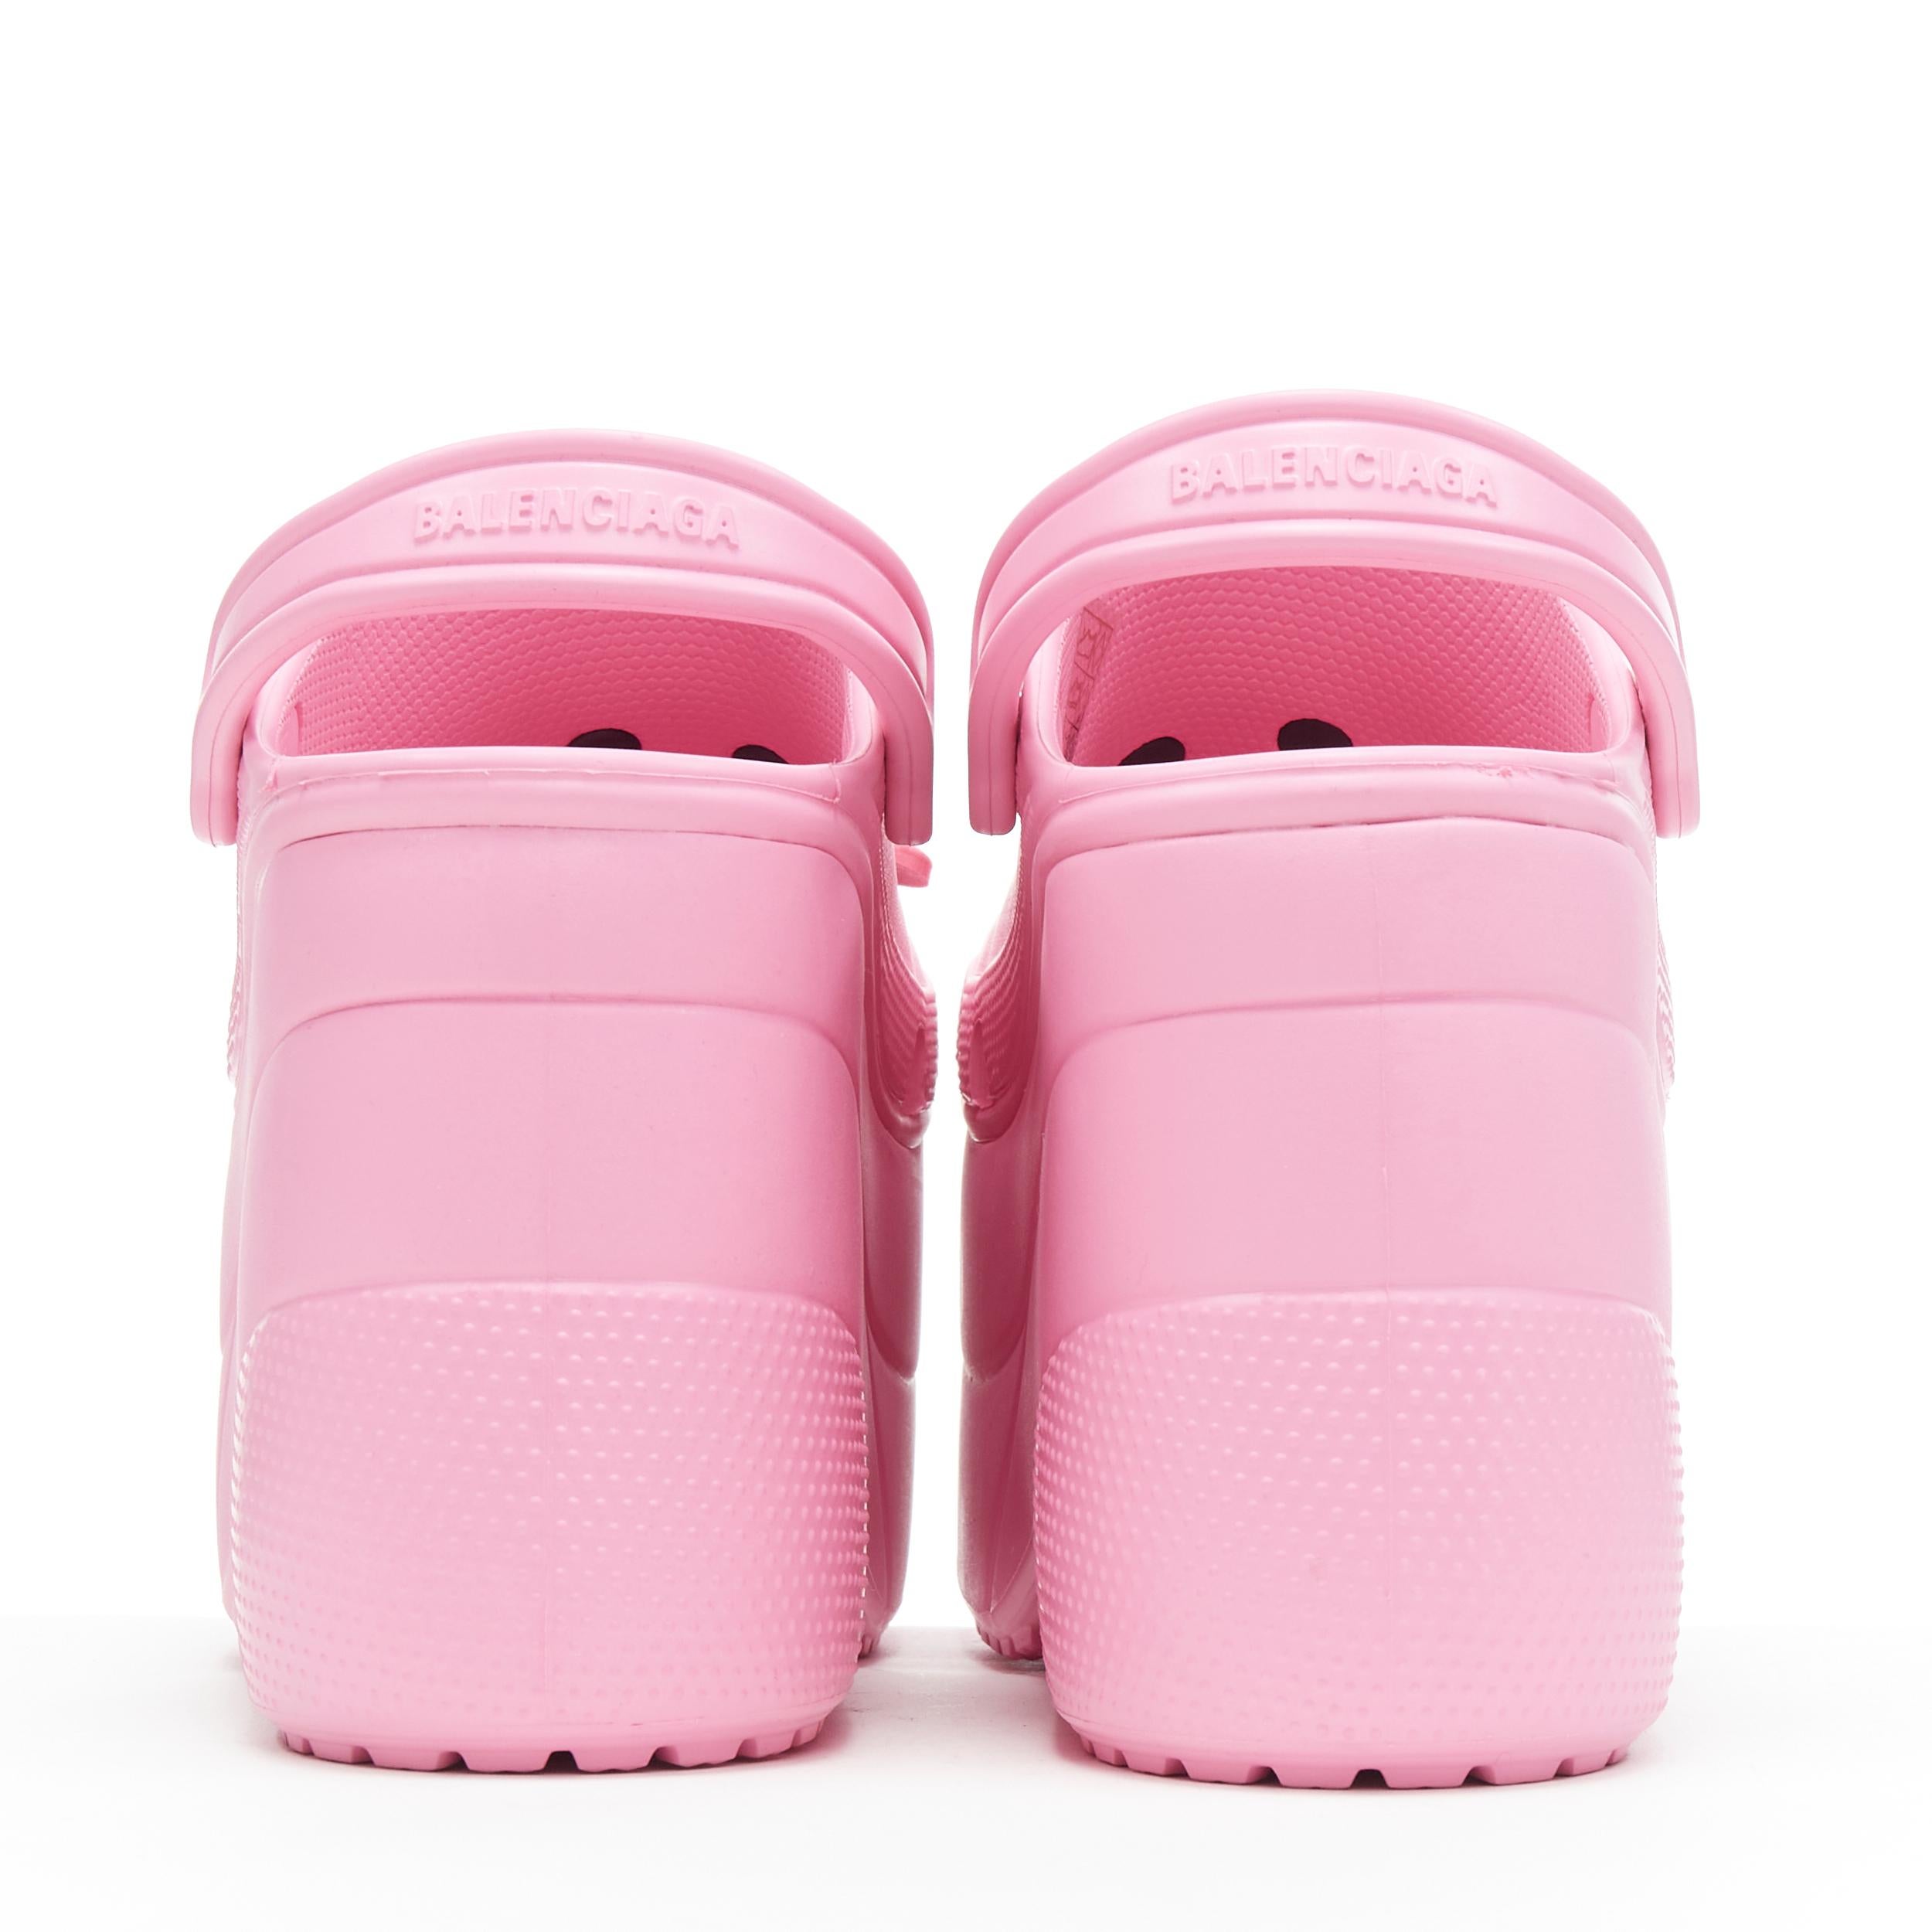 Pink new BALENCIAGA CROCS 2018 Rose Bon Bon pink gibbet platform sandals EU36